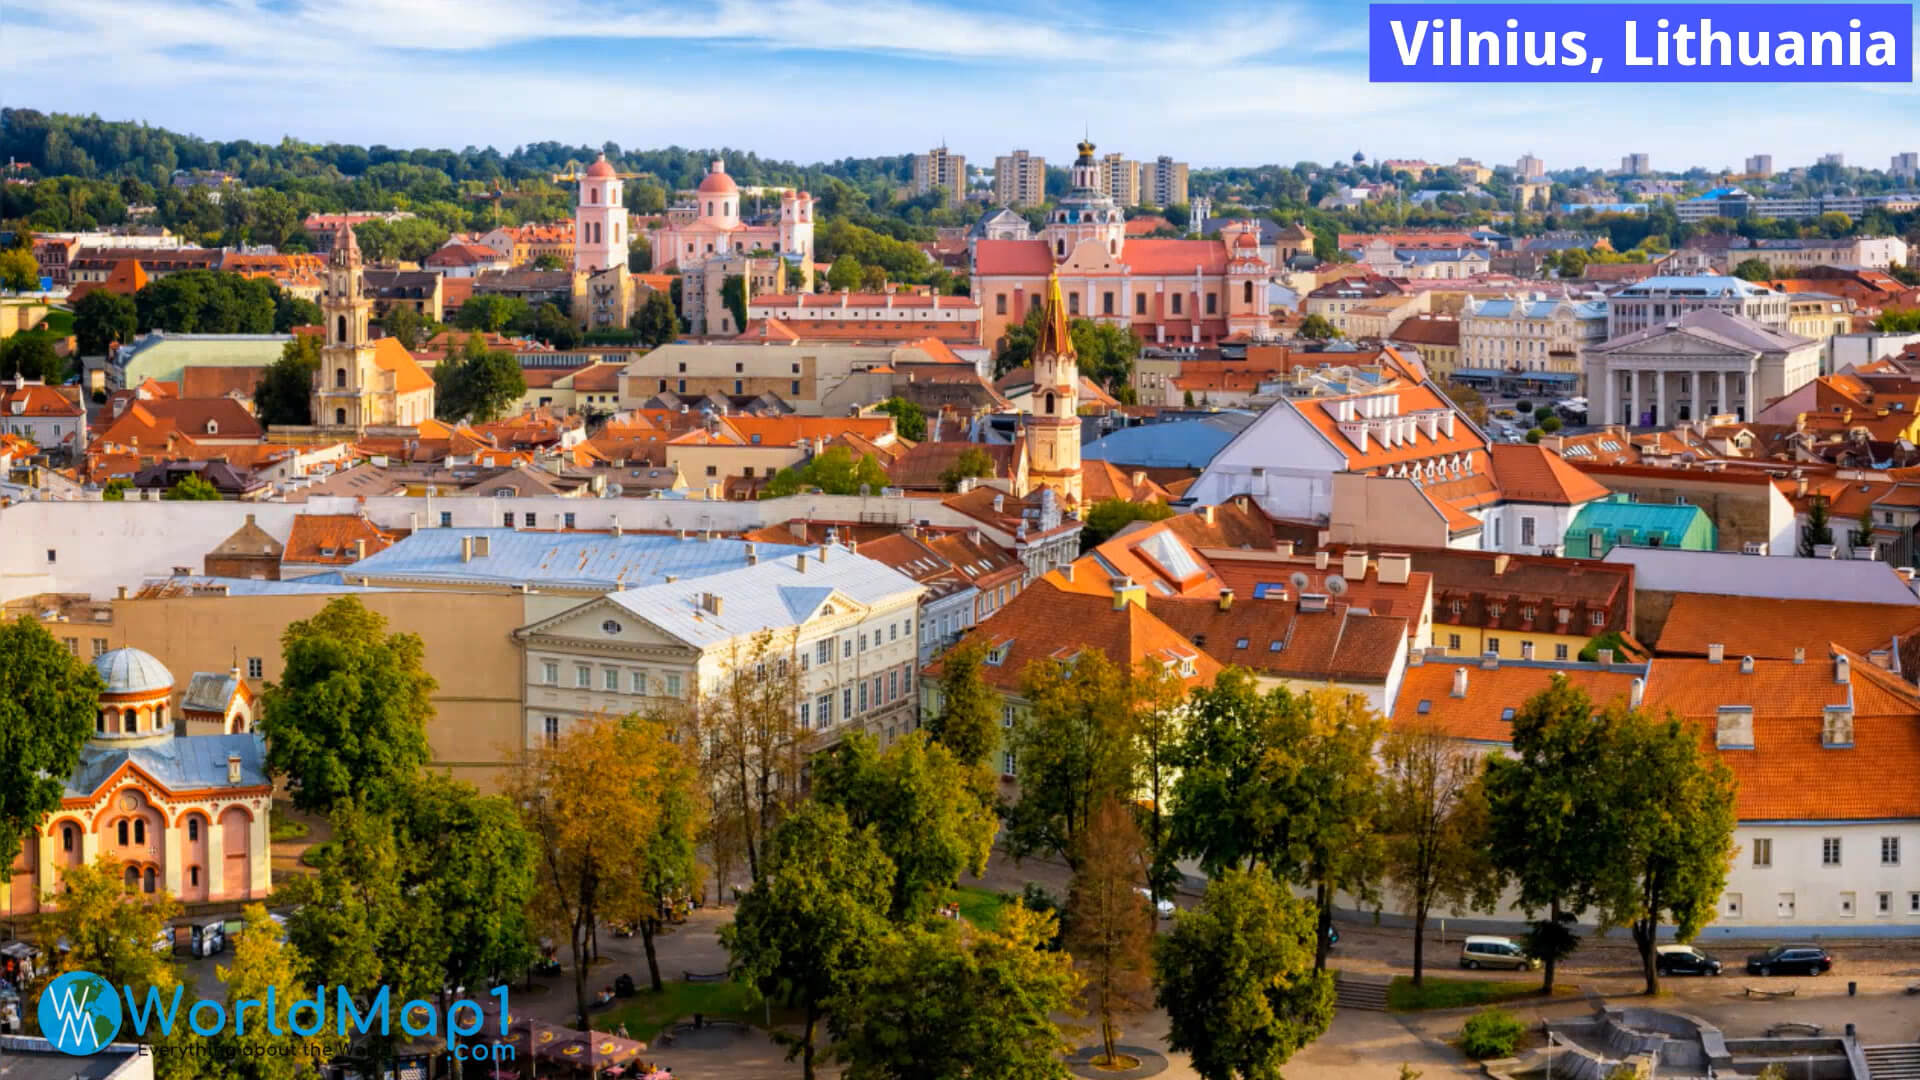 Vilnius in Lithuania